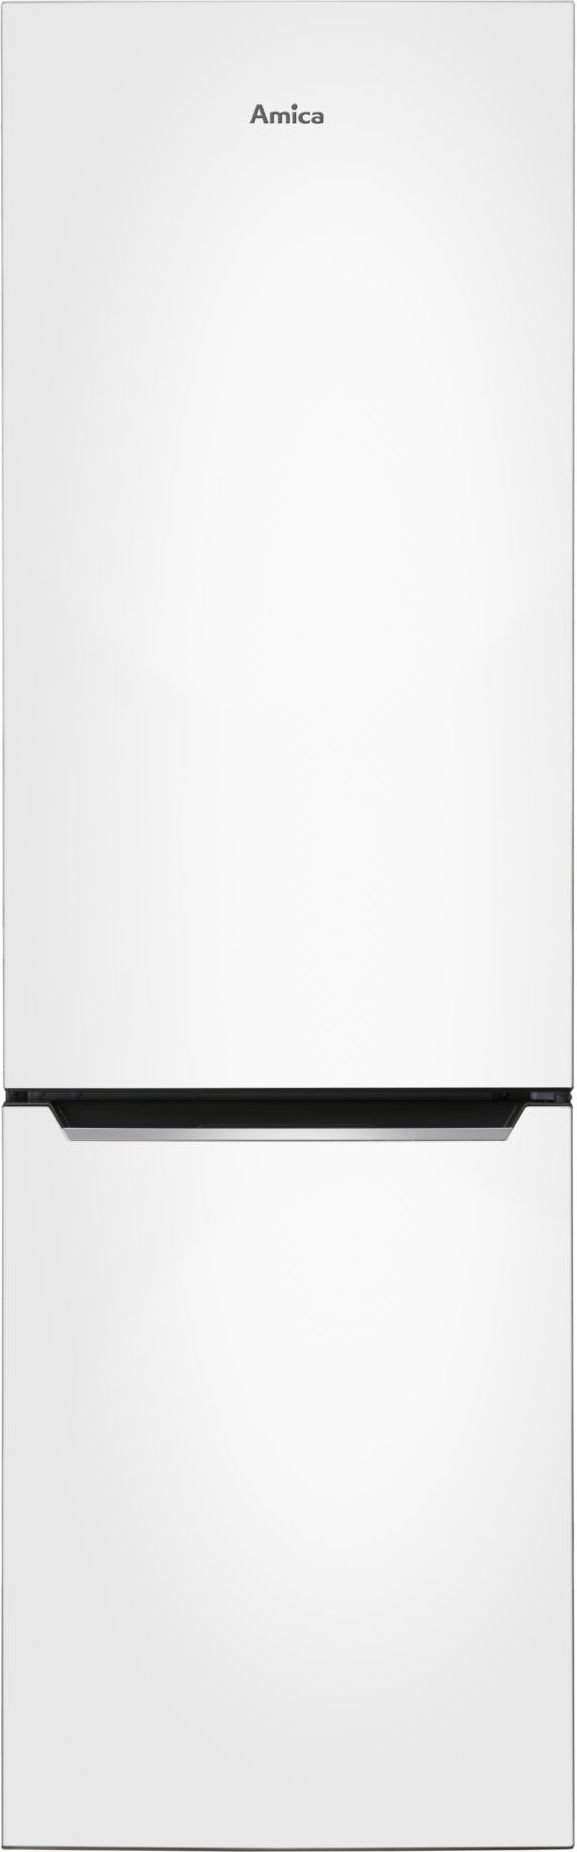 Combine frigorifice - Combina frigorifica  Amica FK2995.2FT,
alb,4 rafturi,
42 dB,
Fara display